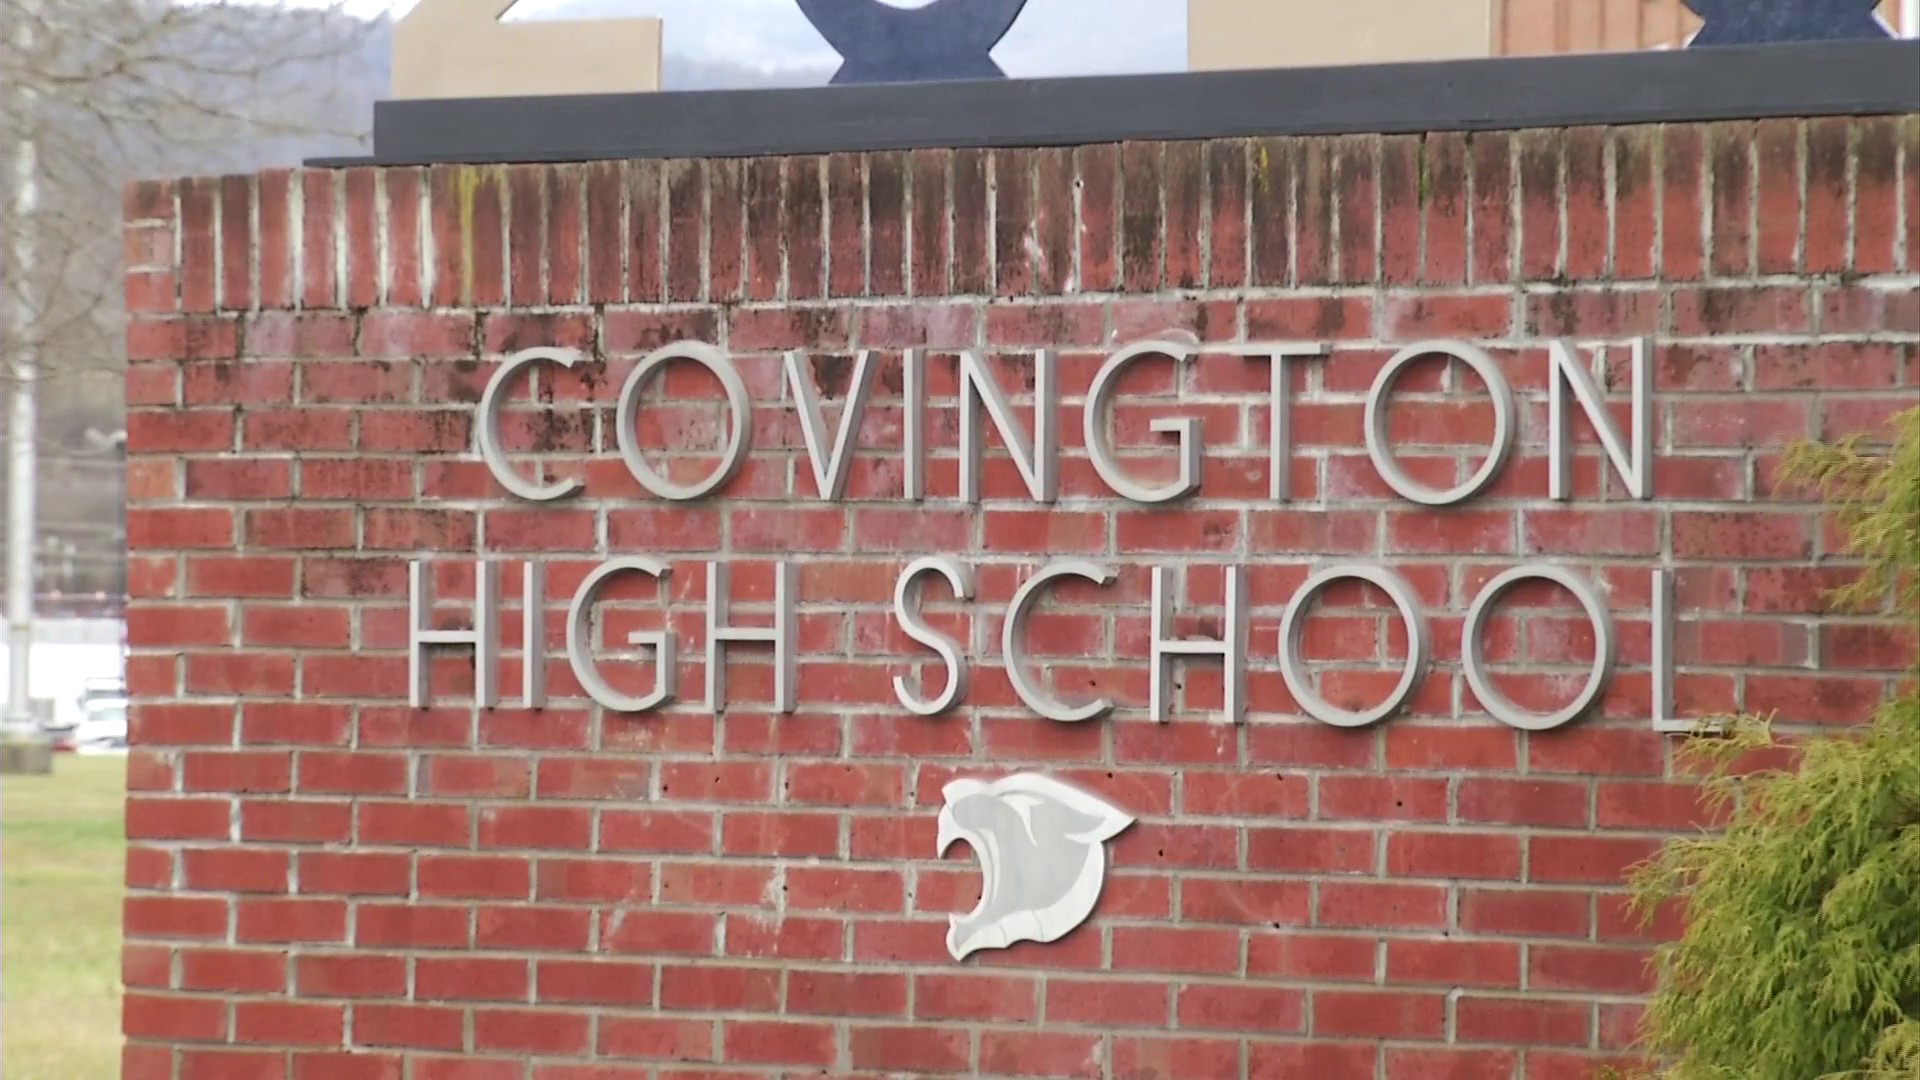 Covington High School